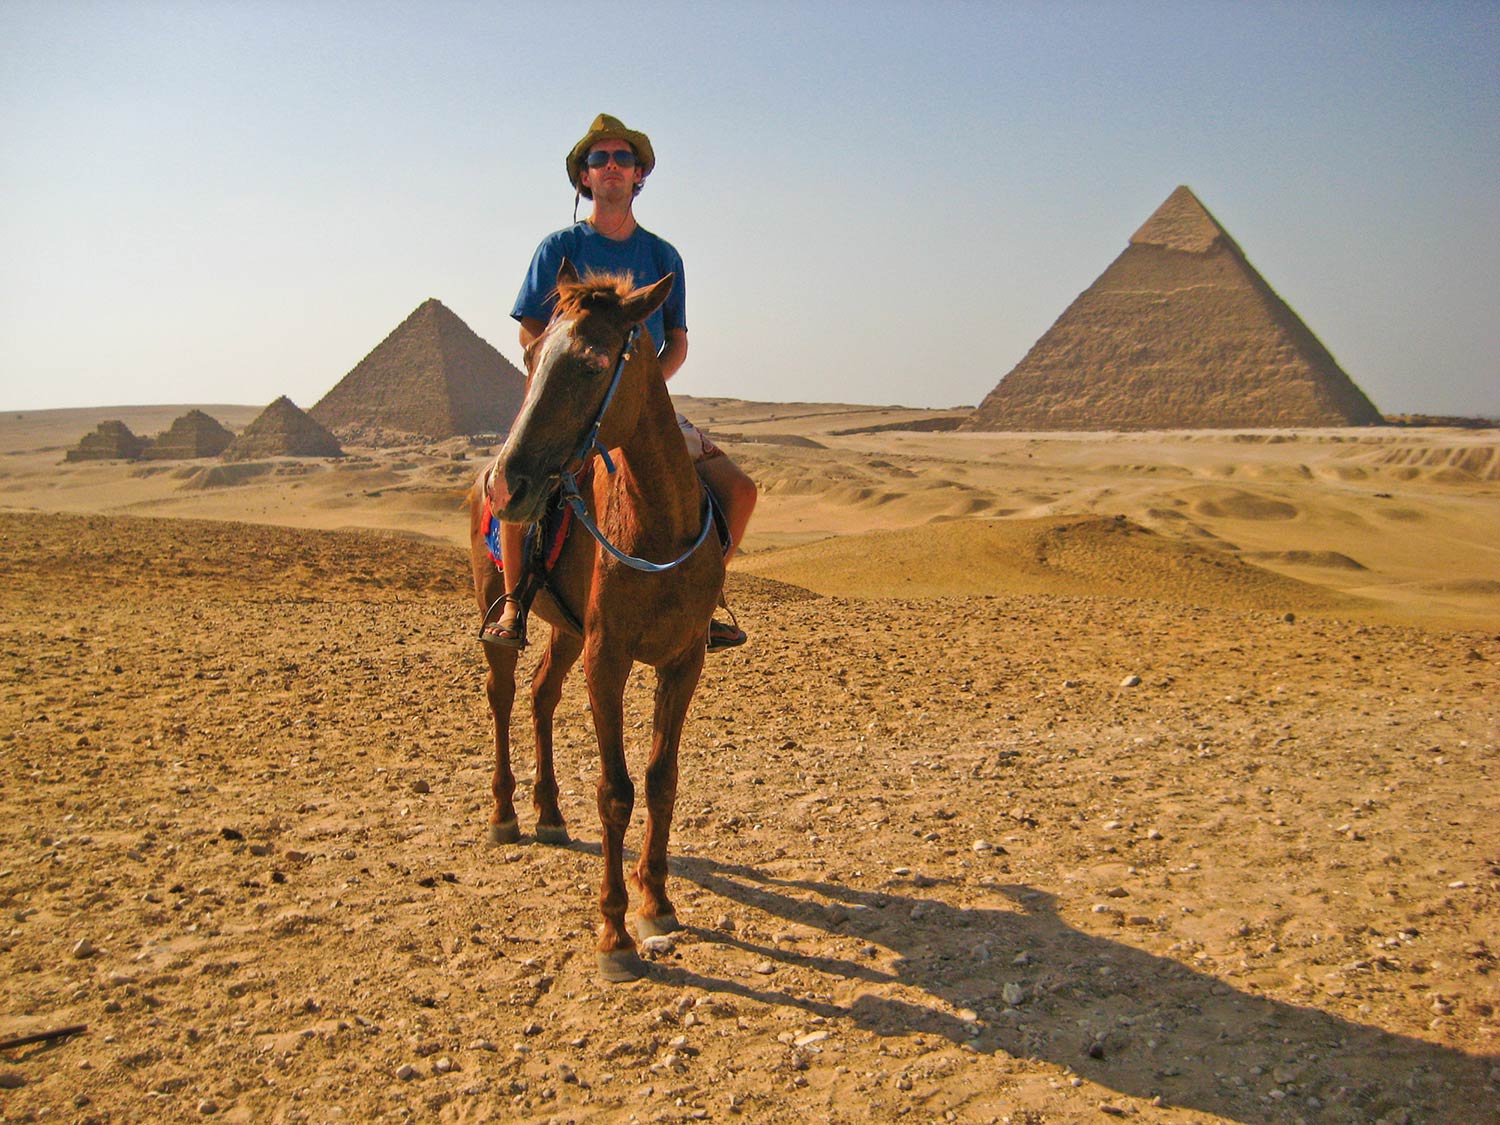 The Great Pyramids of Giza, Cairo, Egypt